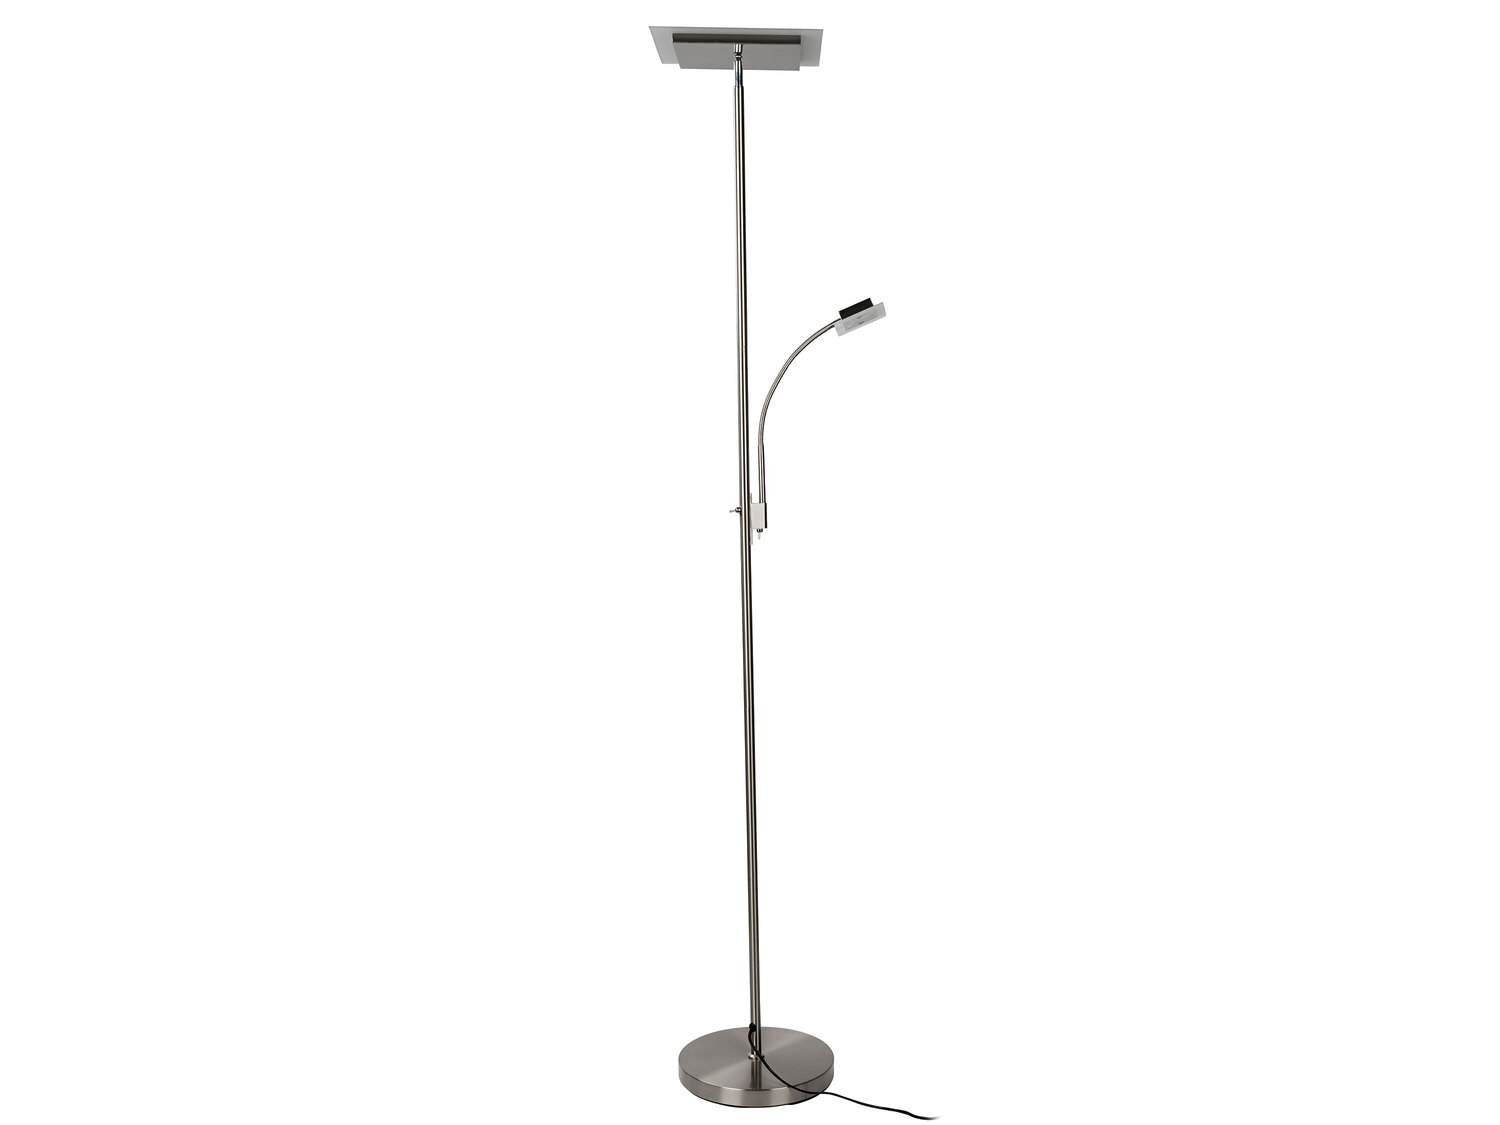 Lampa LED Livarno, cena 179,00 PLN 
- 2 moduły: lampa stojąca (moc 17 W) i lampka ...